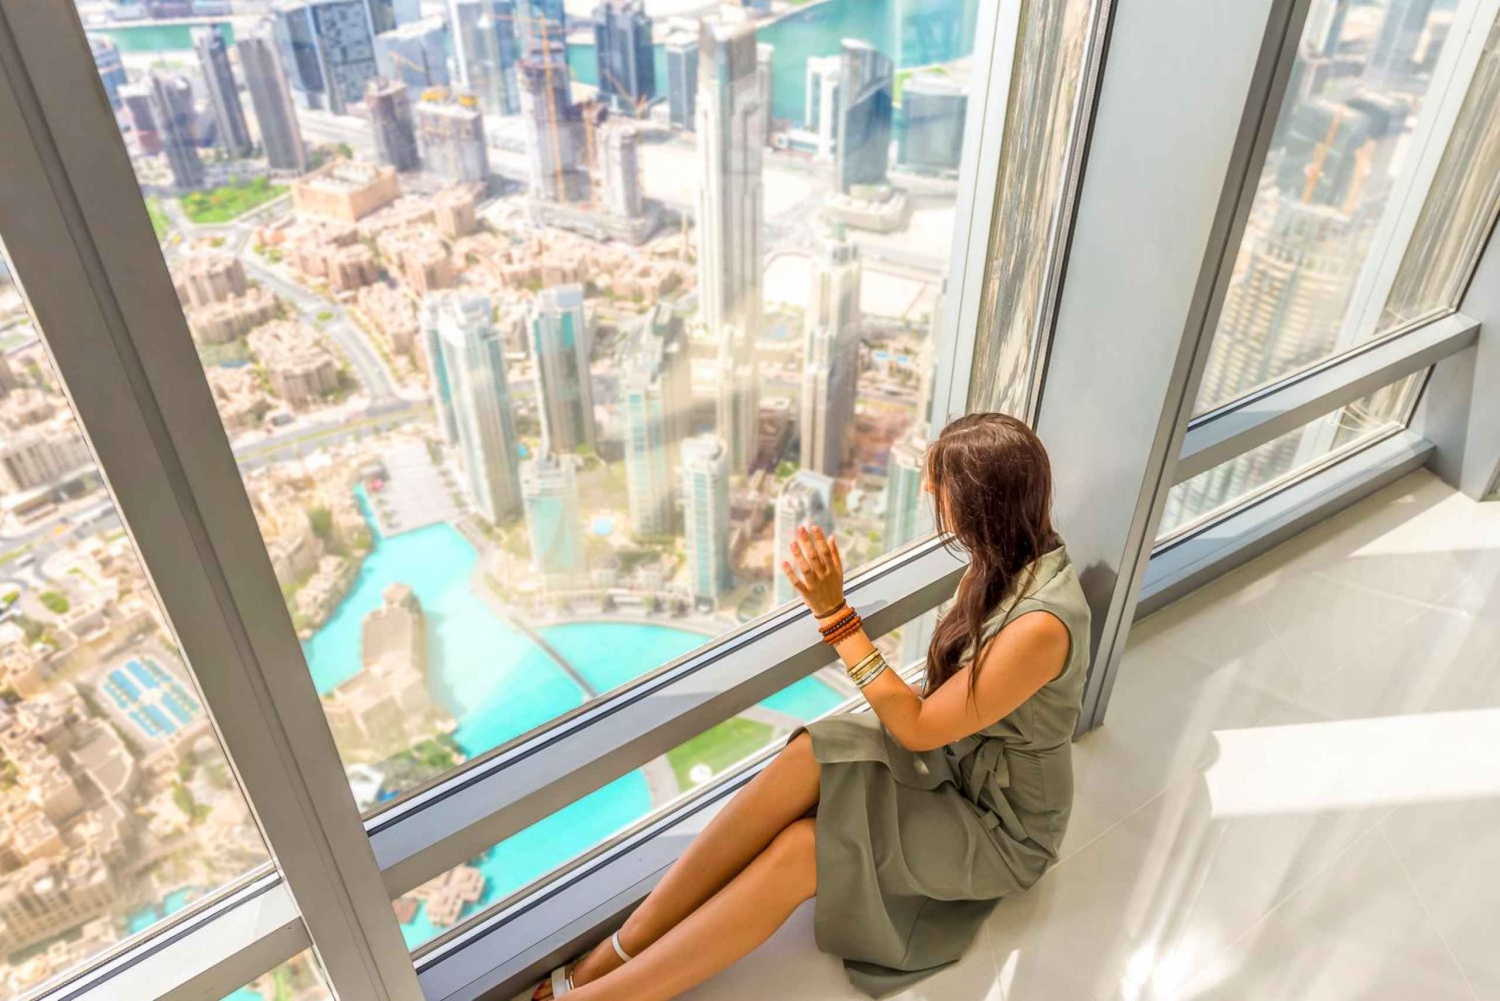 Dubai: Half-Day Private City Tour with Burj Khalifa Tickets